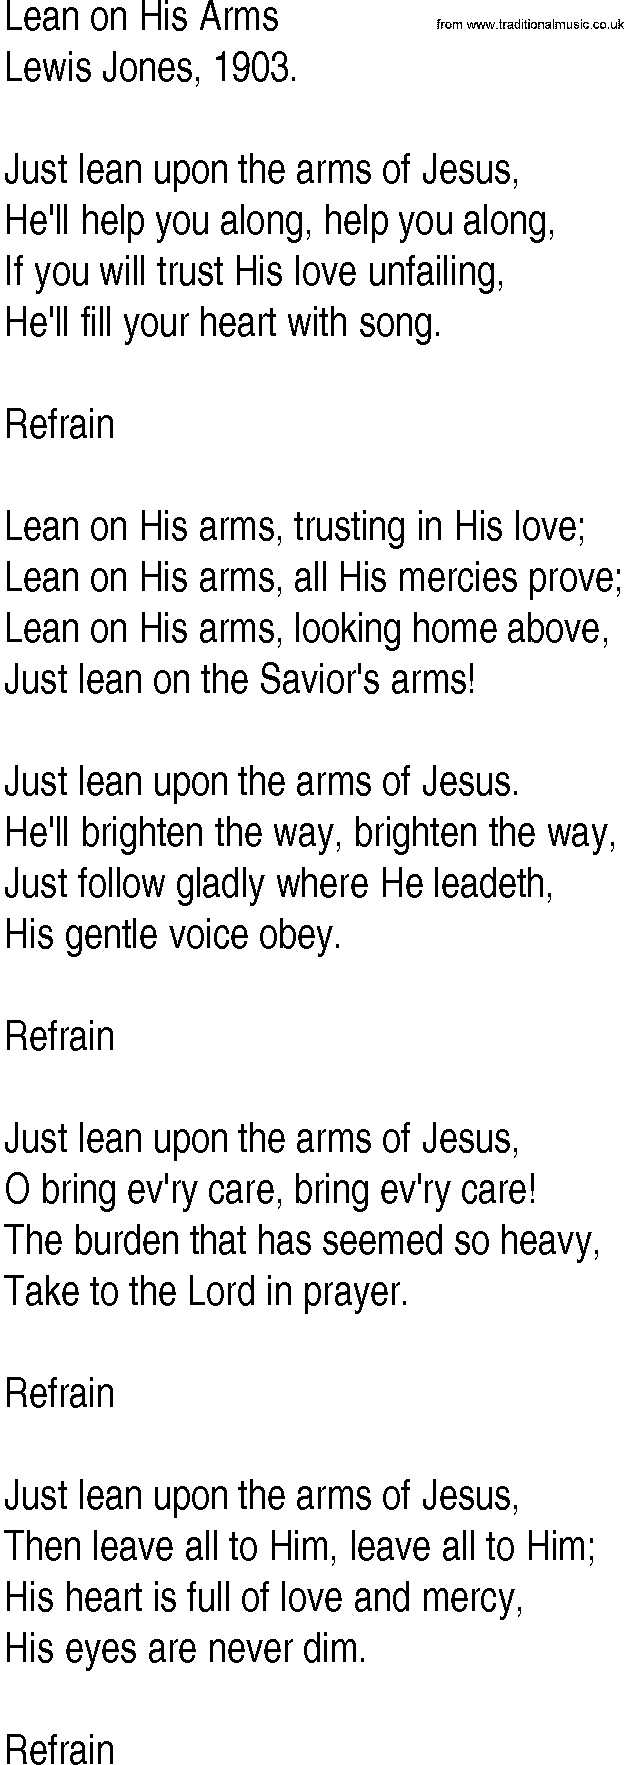 Hymn and Gospel Song: Lean on His Arms by Lewis Jones lyrics